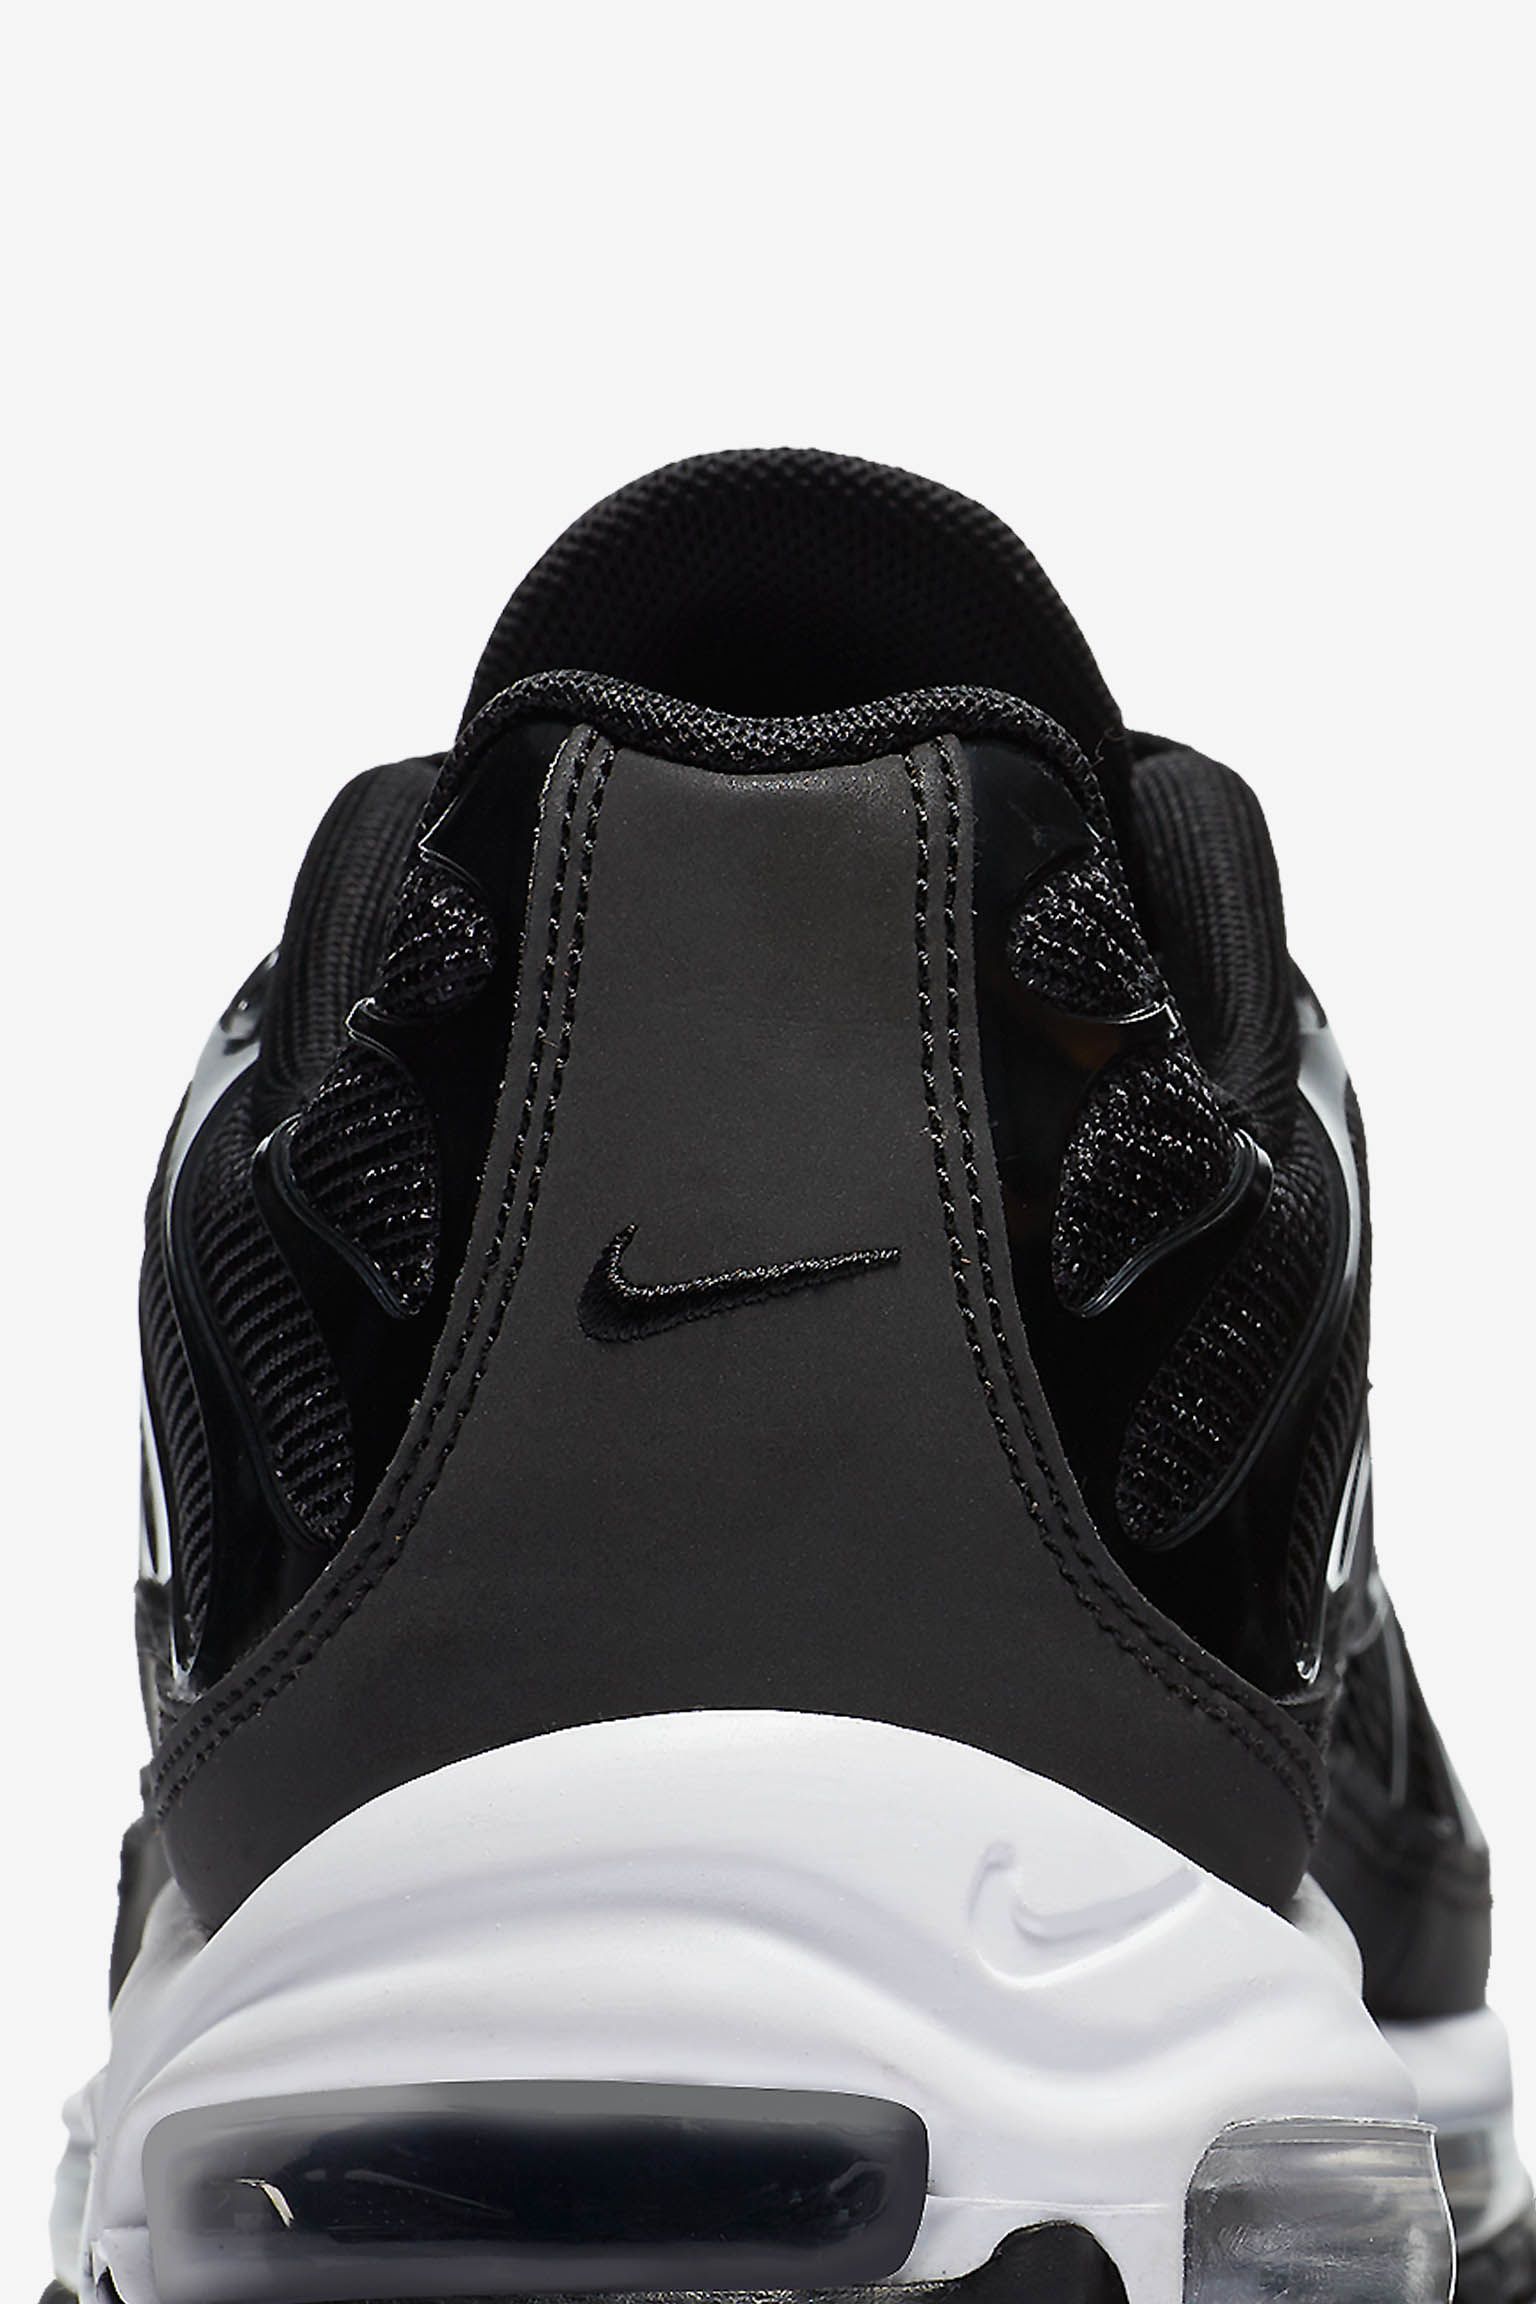 Nike Air Max 97 Plus 'Black & White' Release Date. Nike SNKRS كريم الرينبو للتبييض